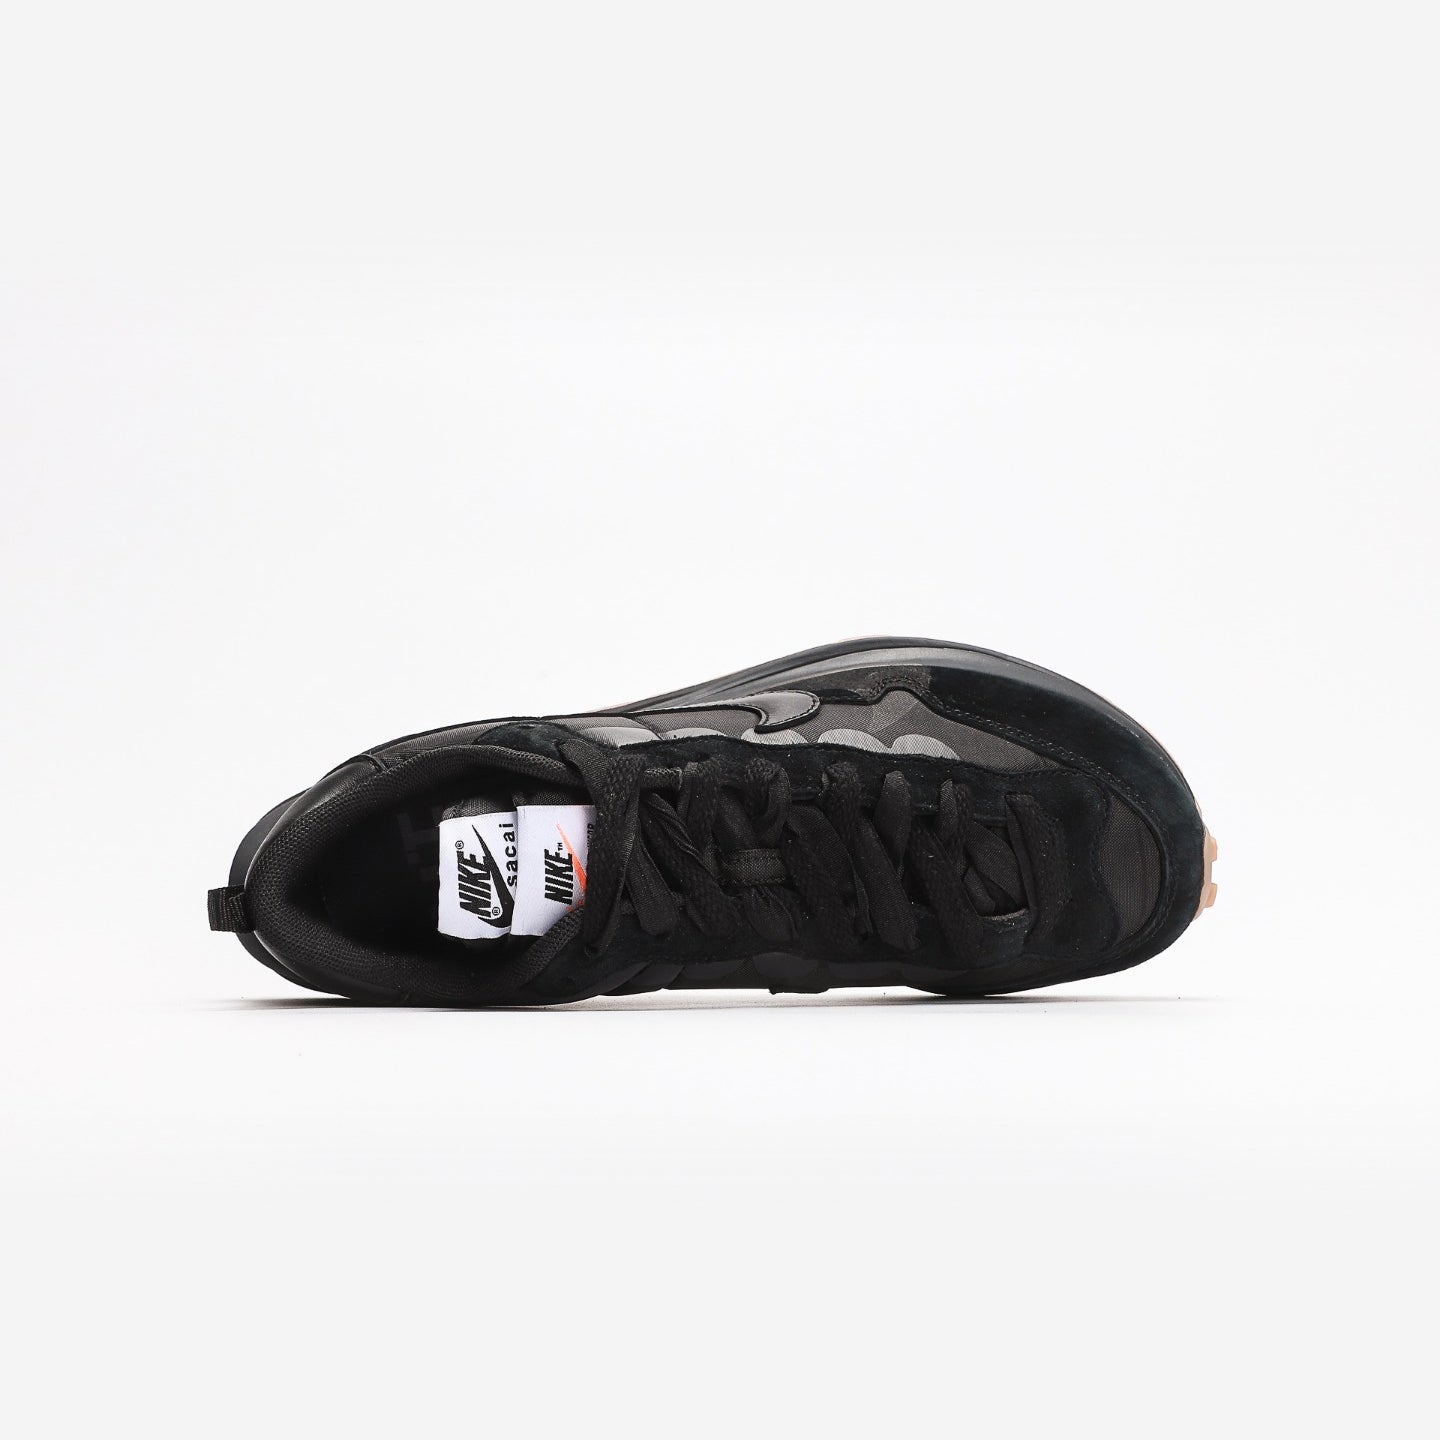 Nike Vaporwaffle x Sacai Black Gum - Urbanize Streetwear